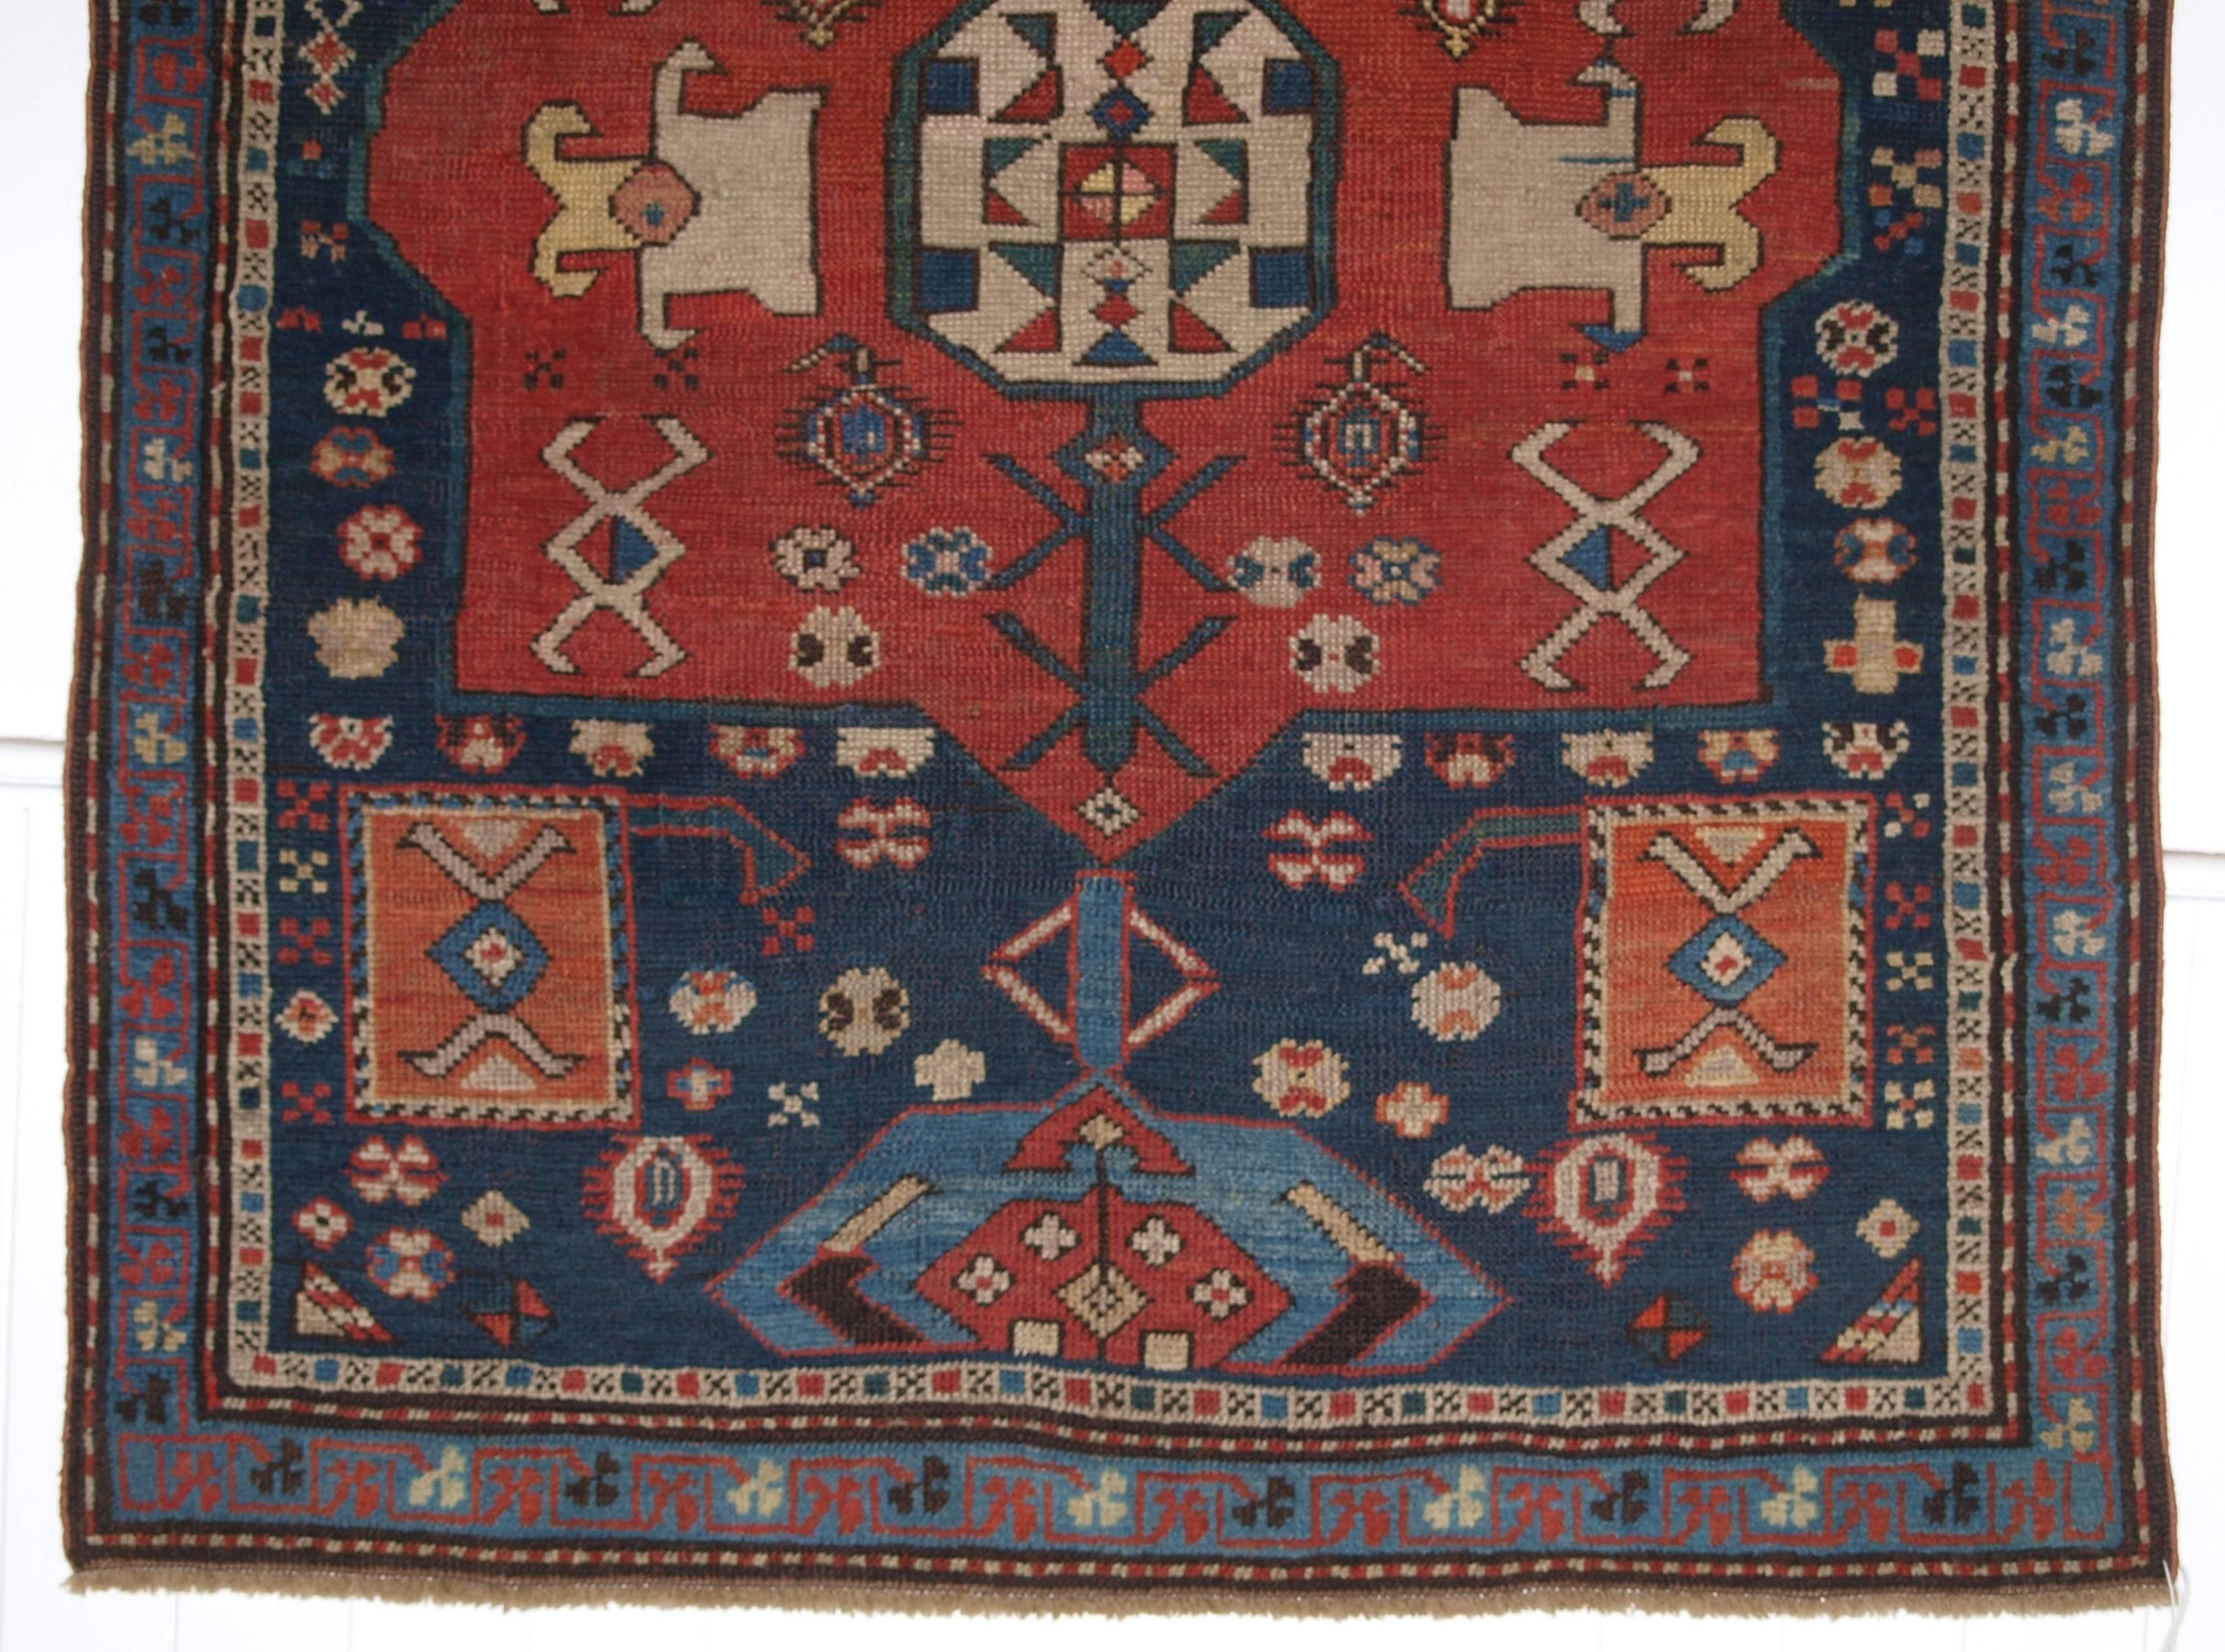 Antique Caucasian Prayer Rug, Karabagh Region of Scarce Design In Excellent Condition For Sale In Moreton-in-Marsh, GB